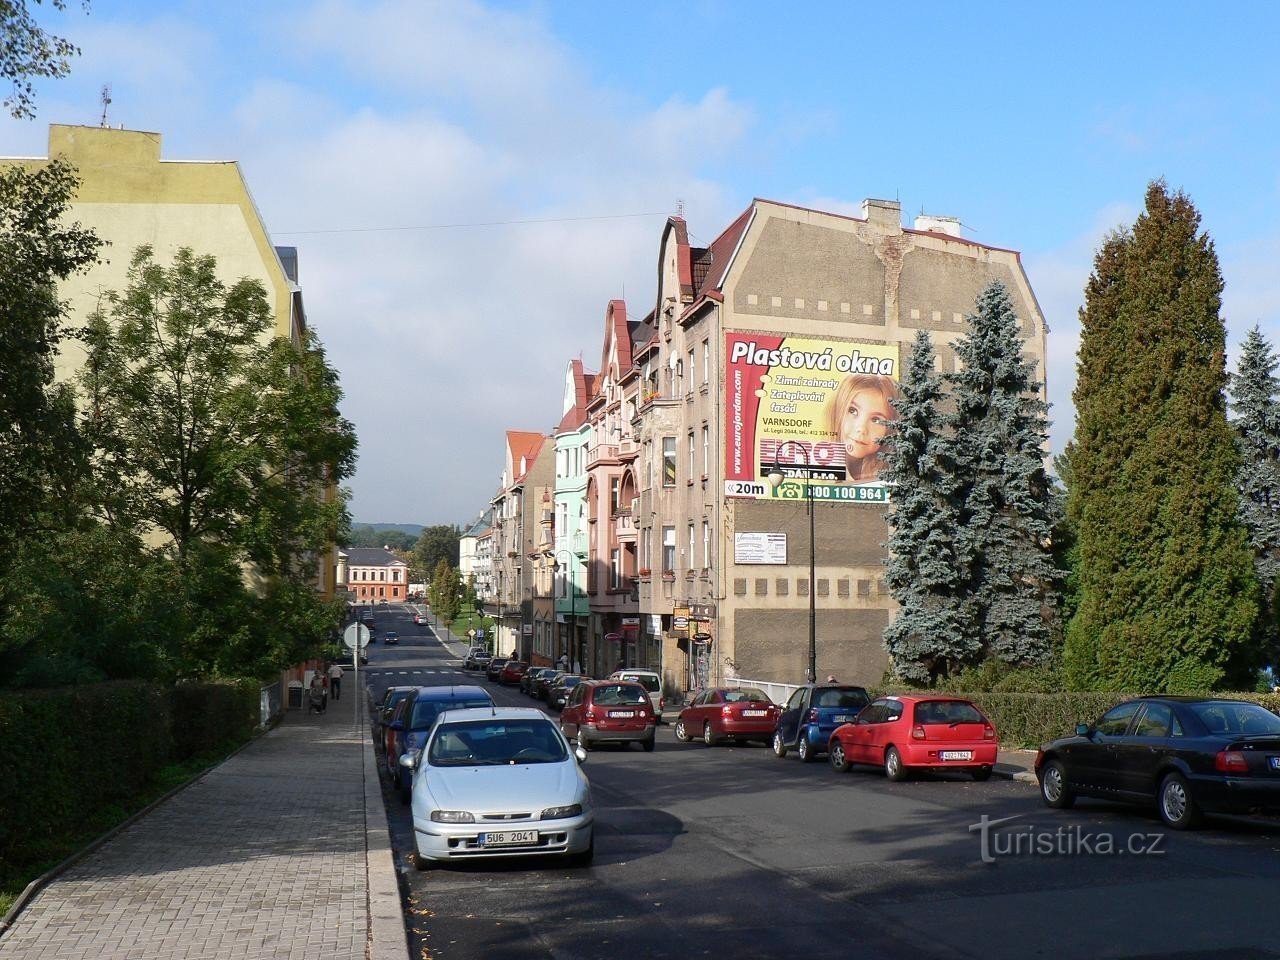 Varnsdorf, calle cerca de la plaza